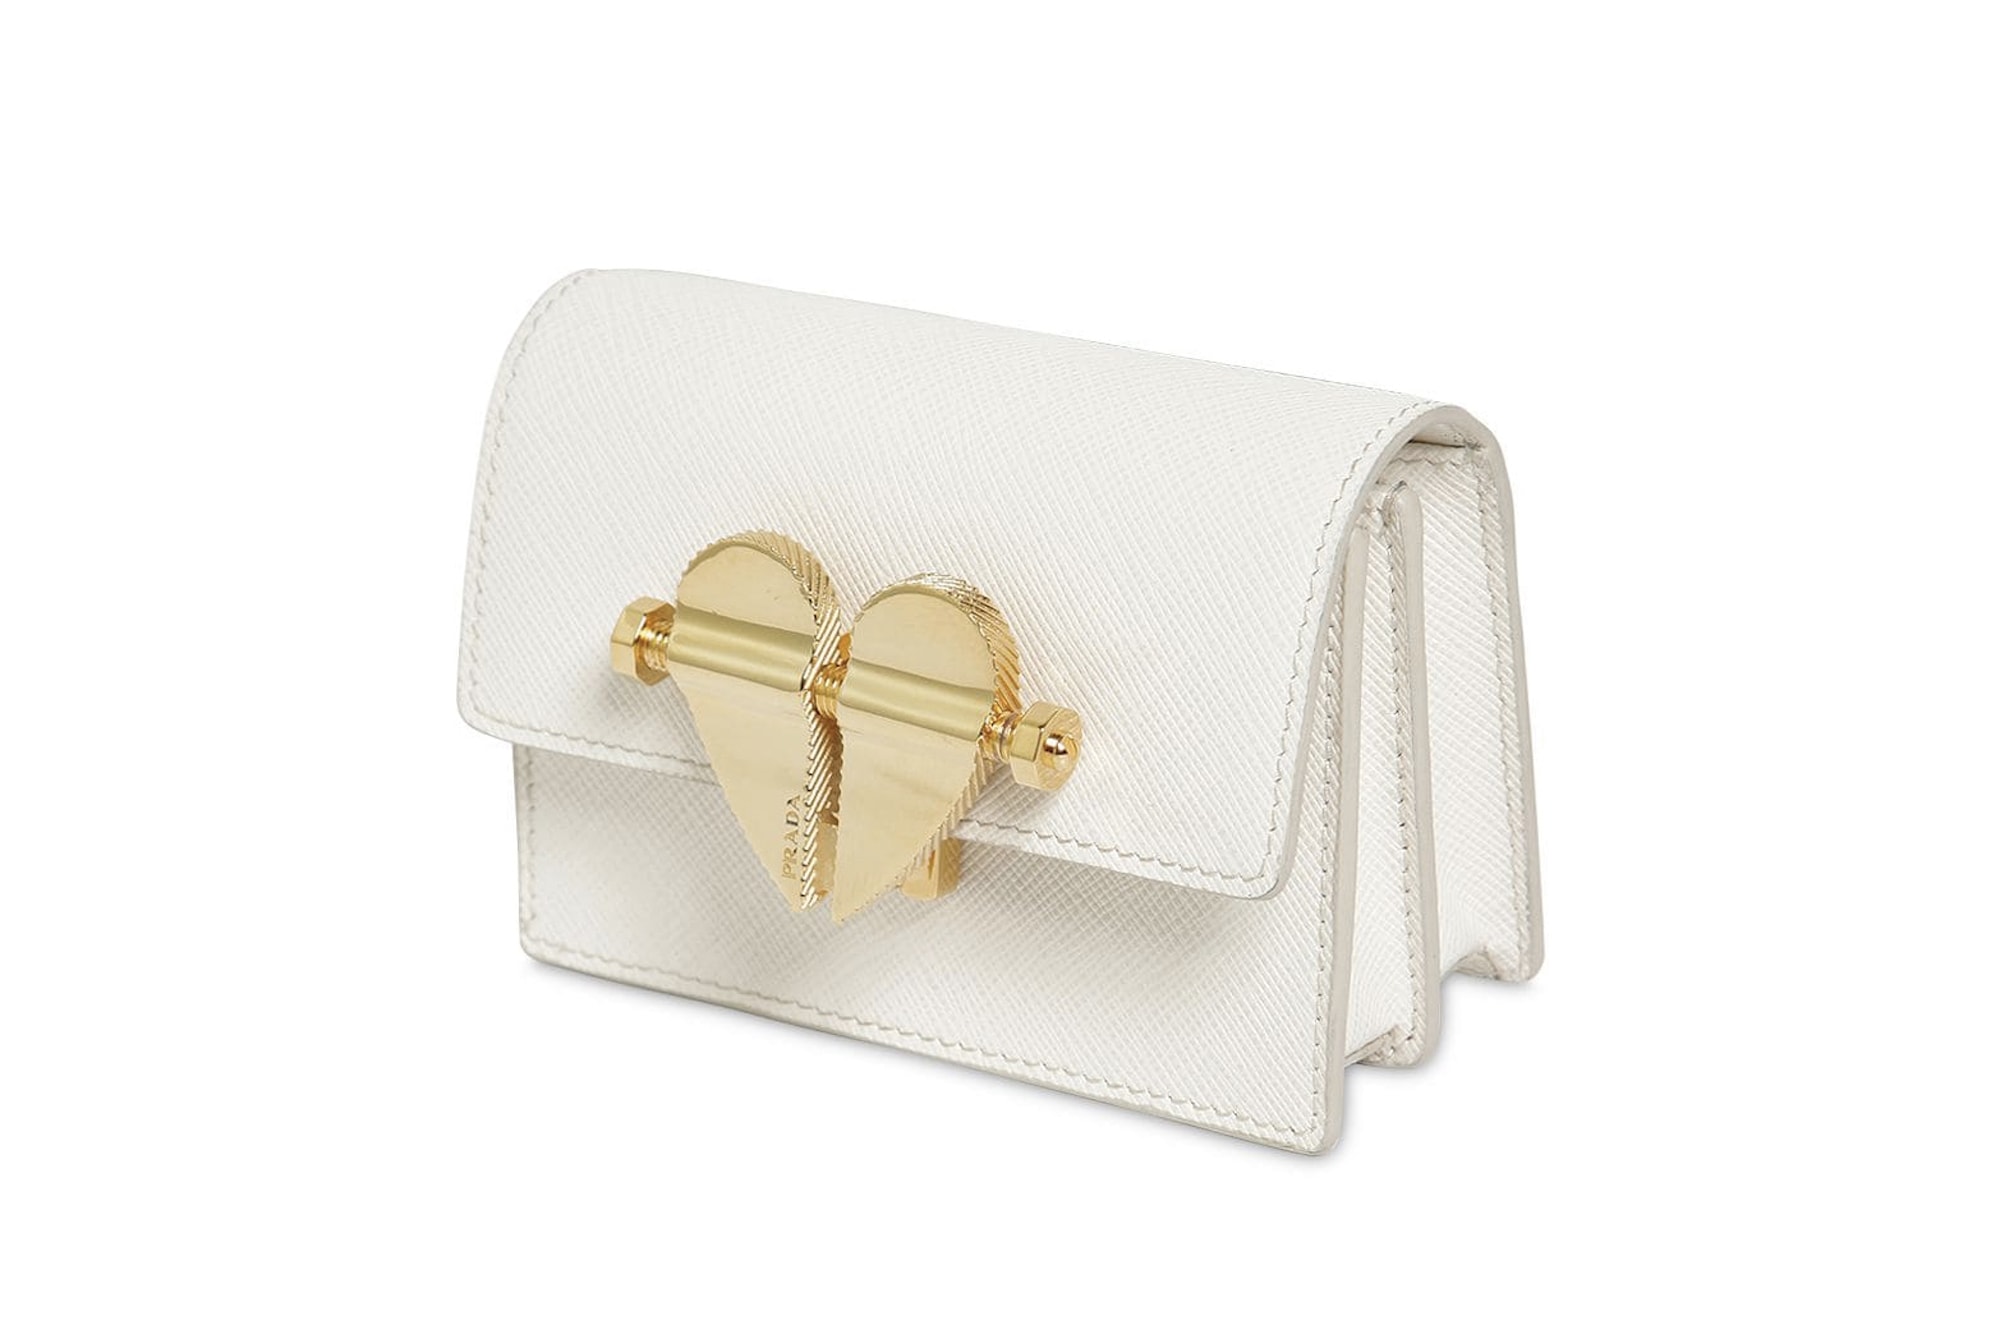 Prada Heart Lock Mini Cross Body Bag in White Accessory Designer Tiny Bag Trend Purse